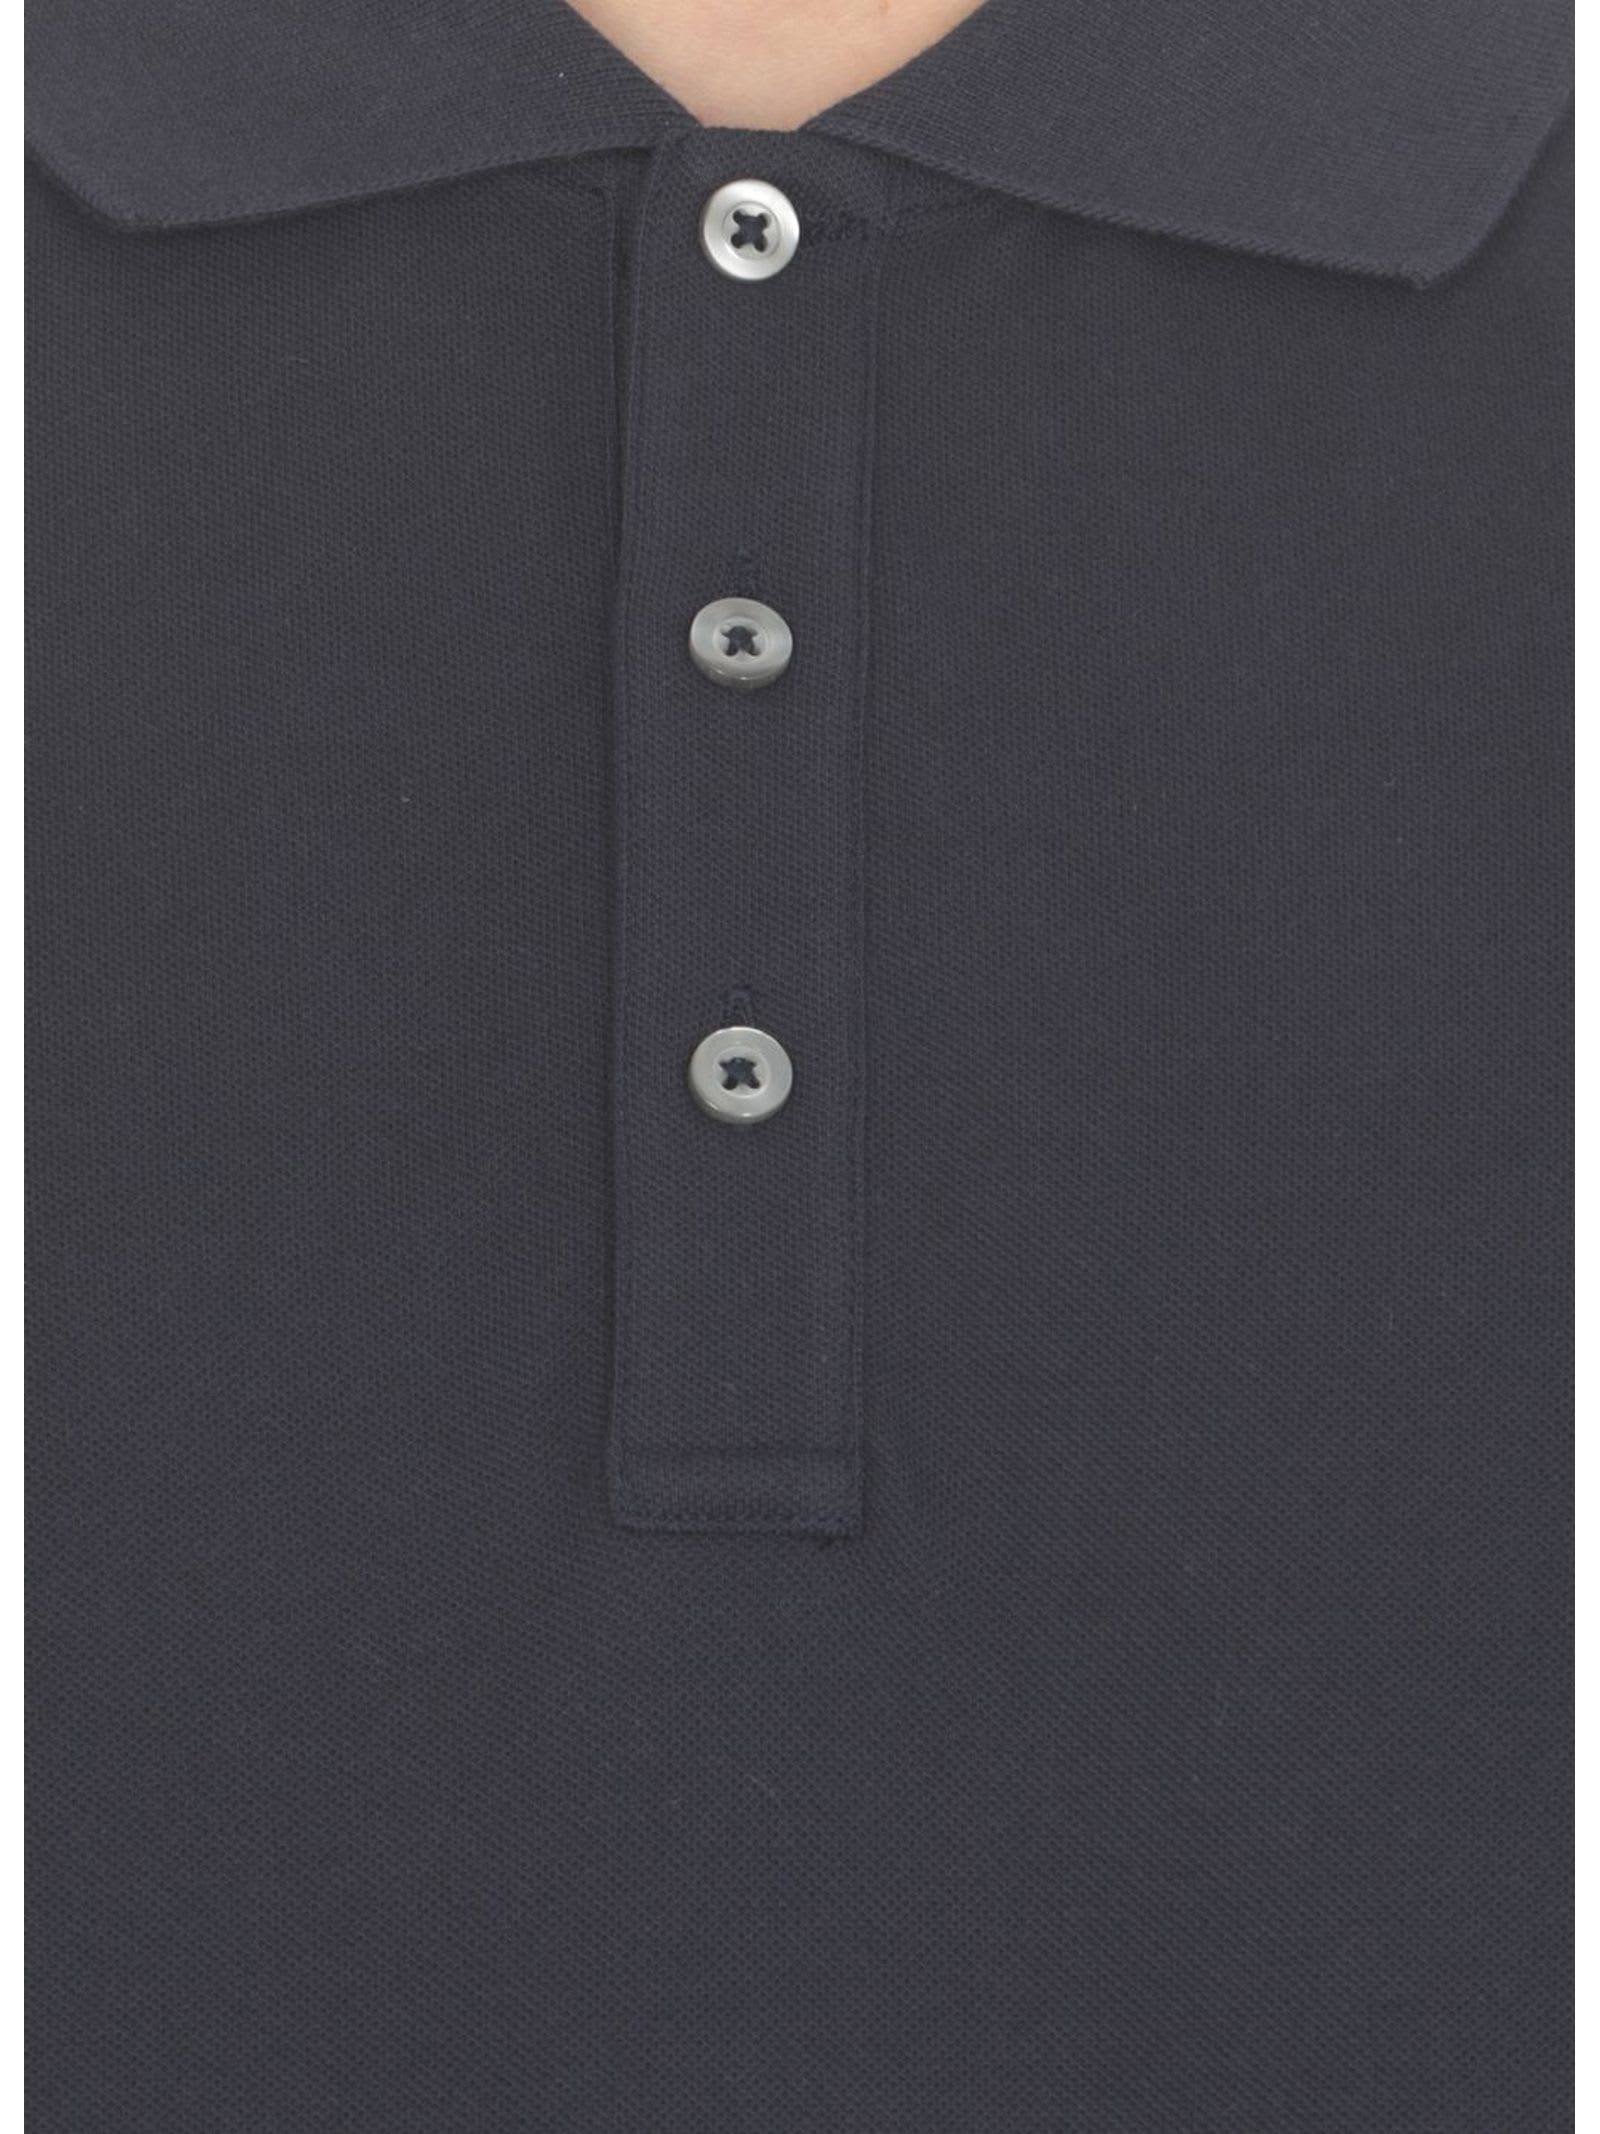 Shop Fay Blue Cotton Polo Shirt